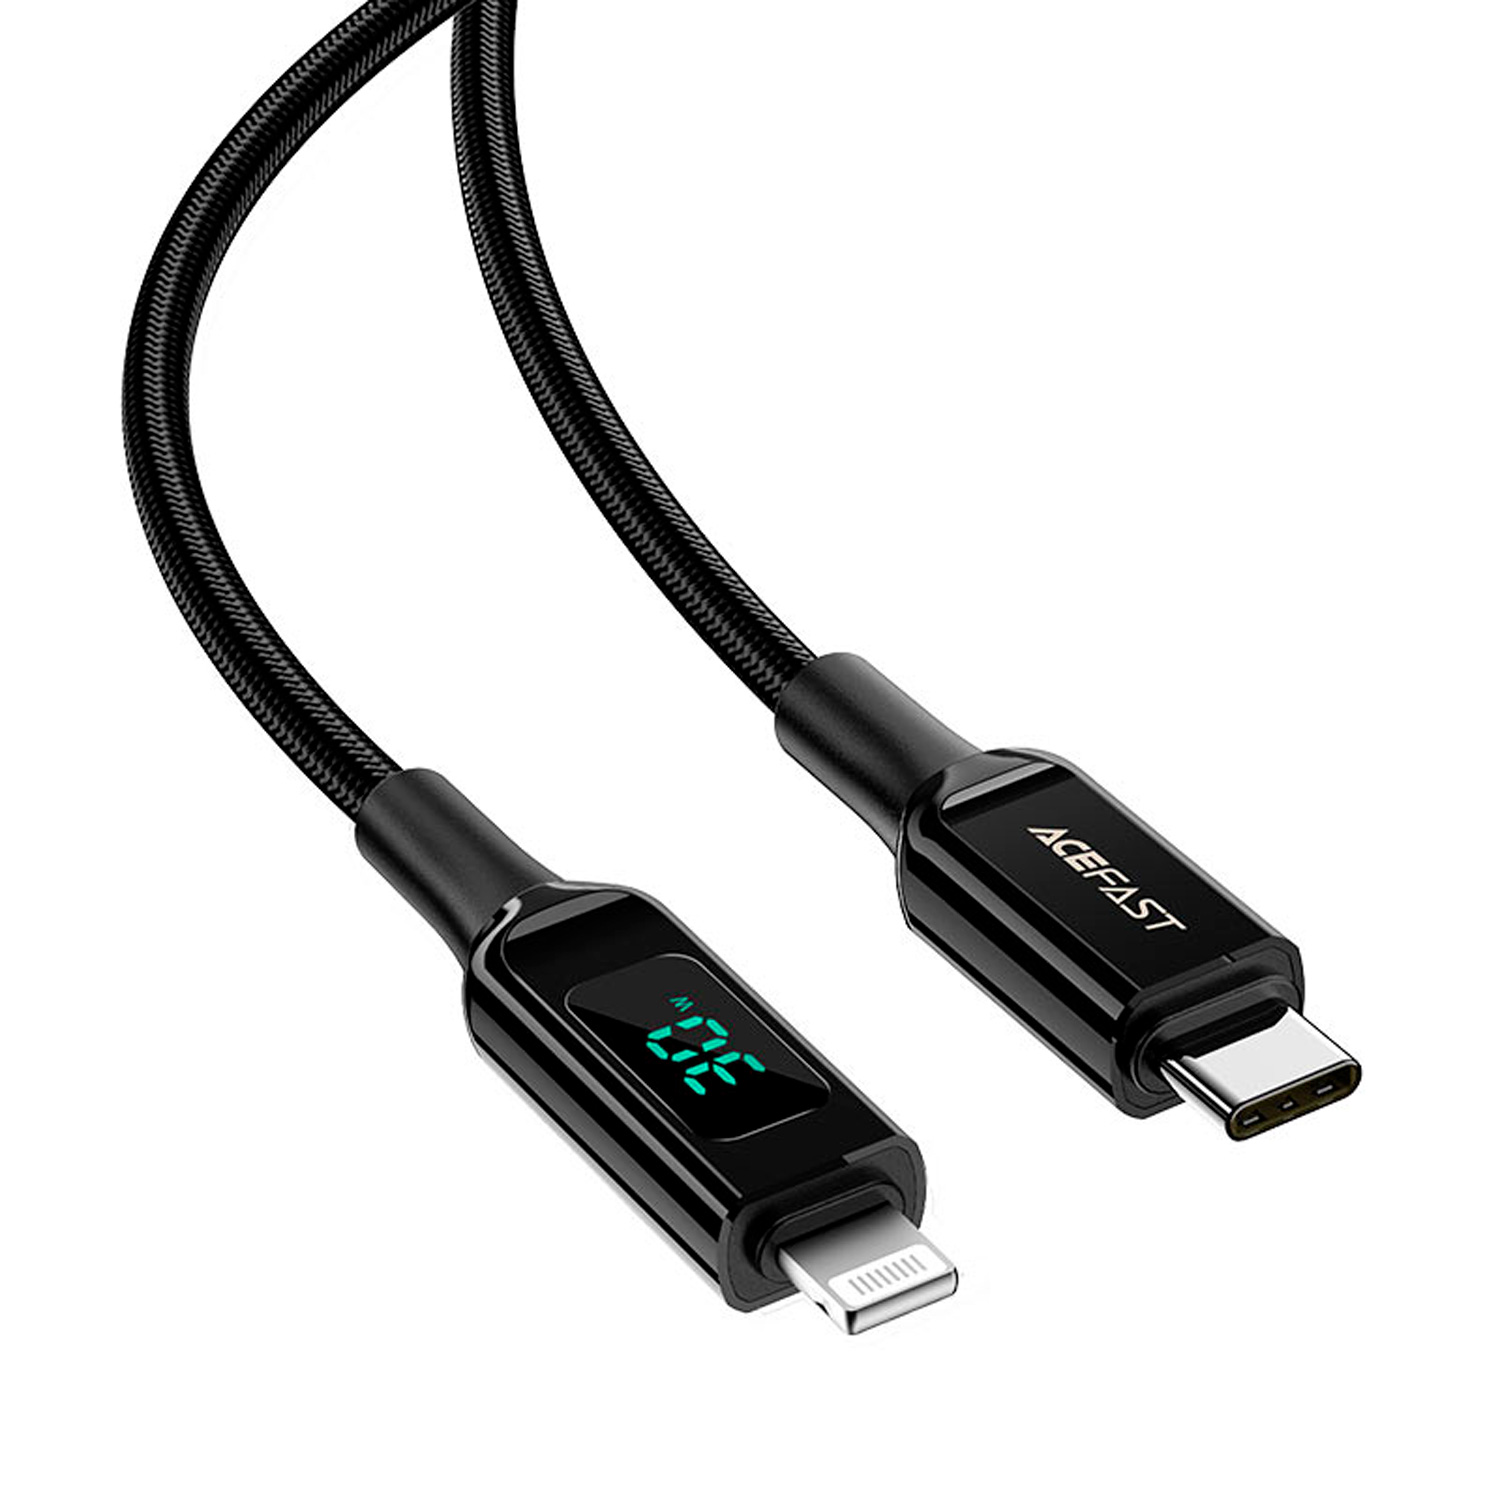 Cabo Acefast C6-01 USB-C para Lightning 30W 1.2 Metros - Preto